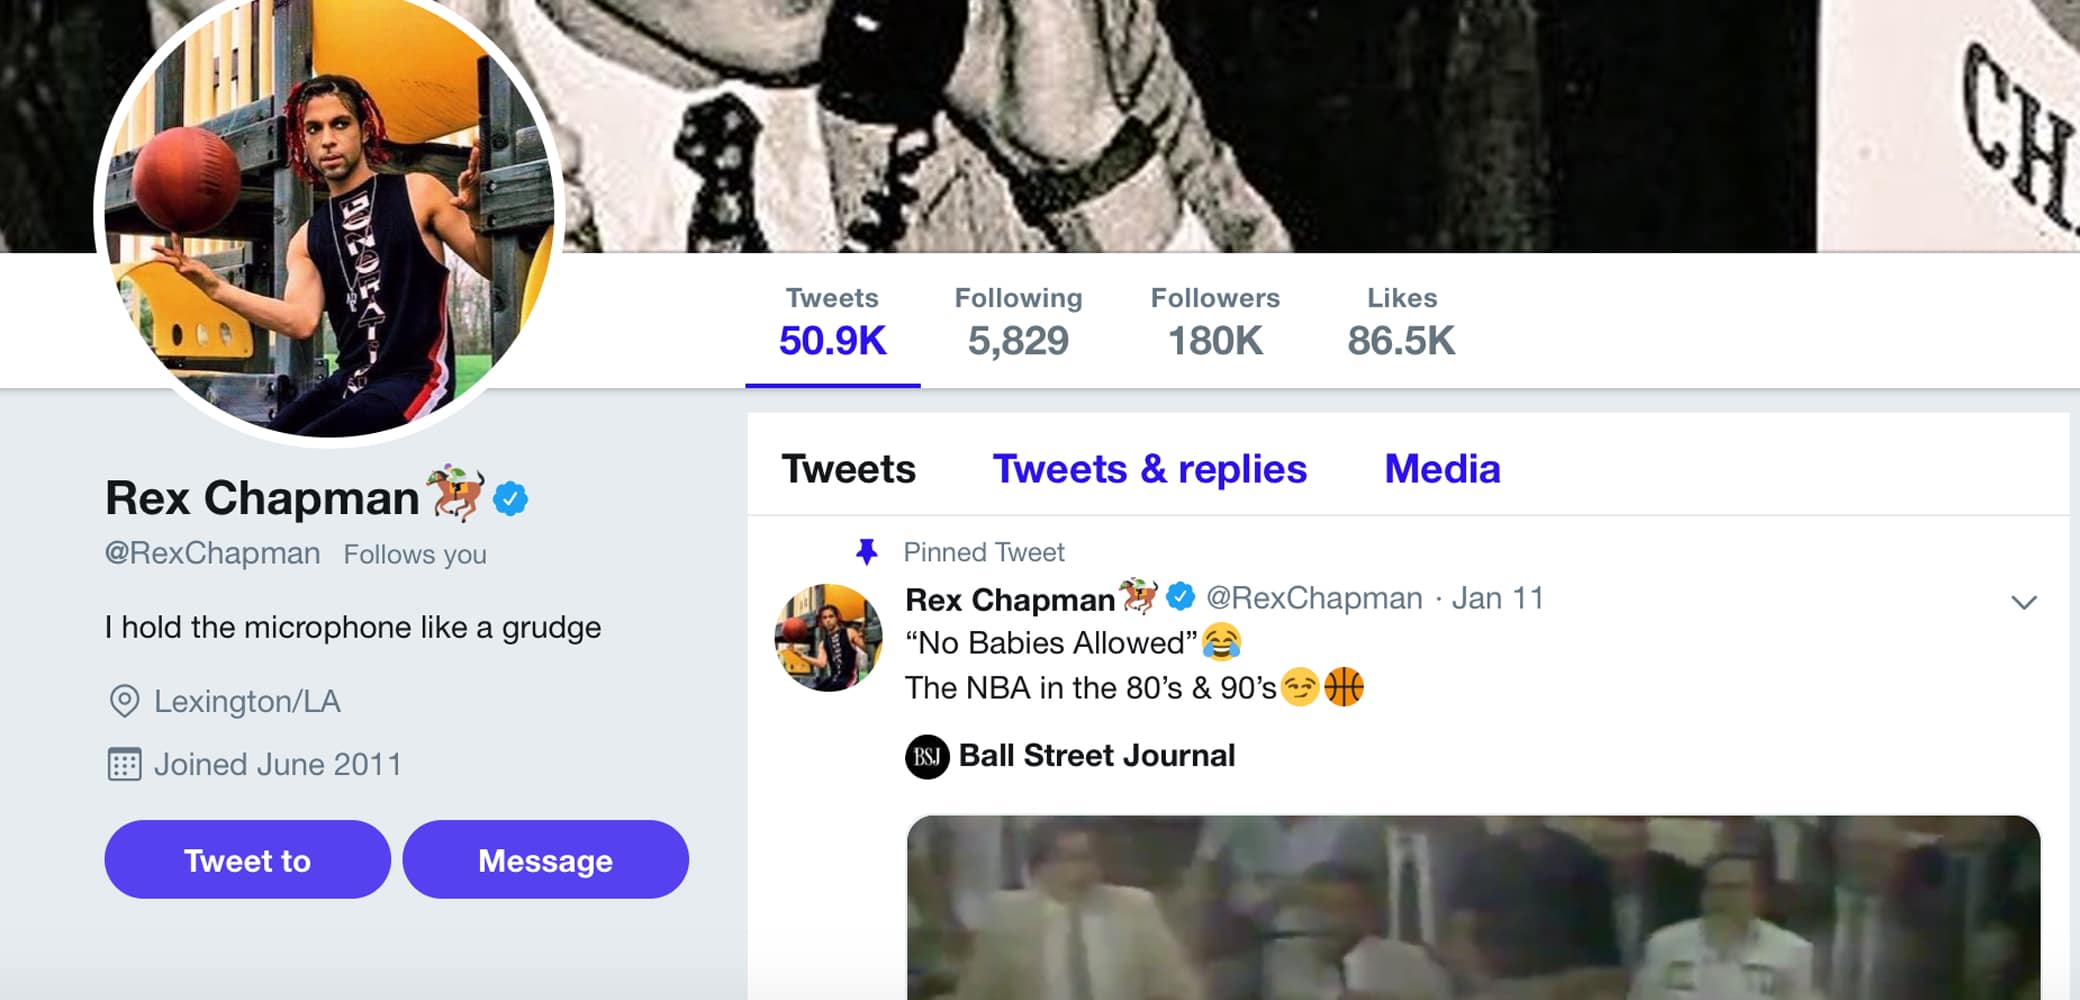 Sports world reacts to Rex Chapman's thirsty tweet